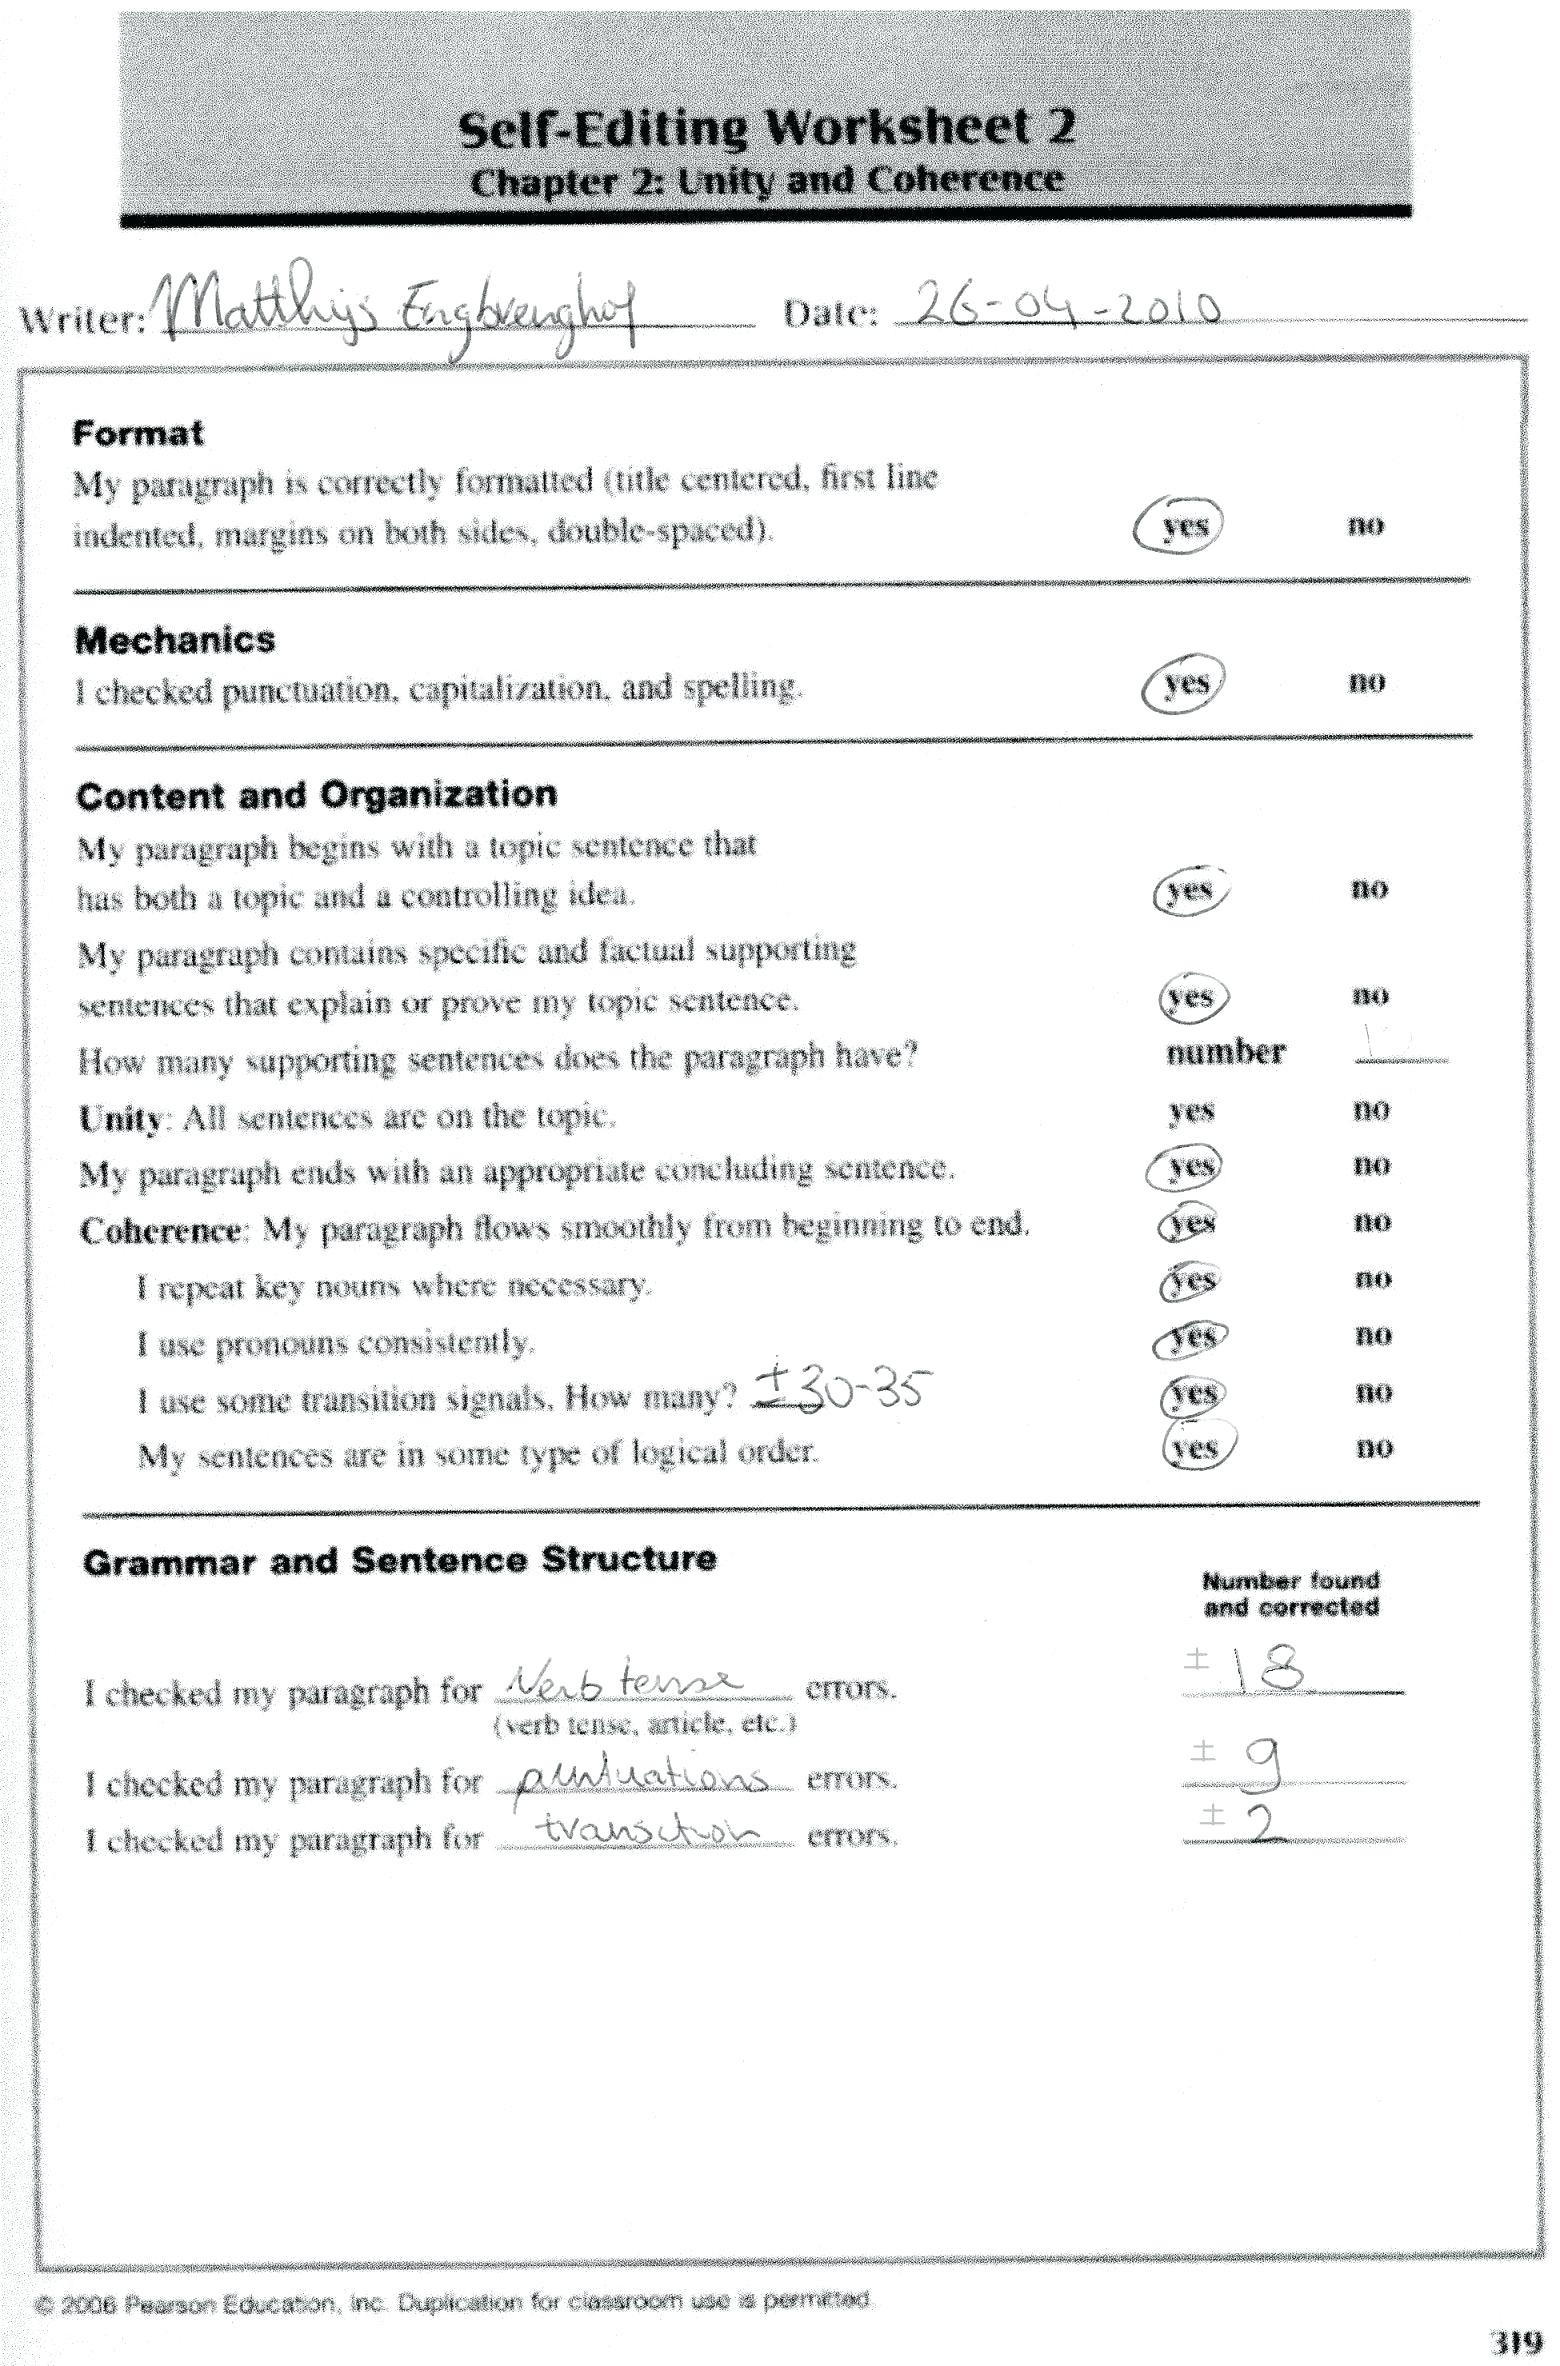 paragraph-editing-worksheets-5th-grade-spineprintco-db-excel